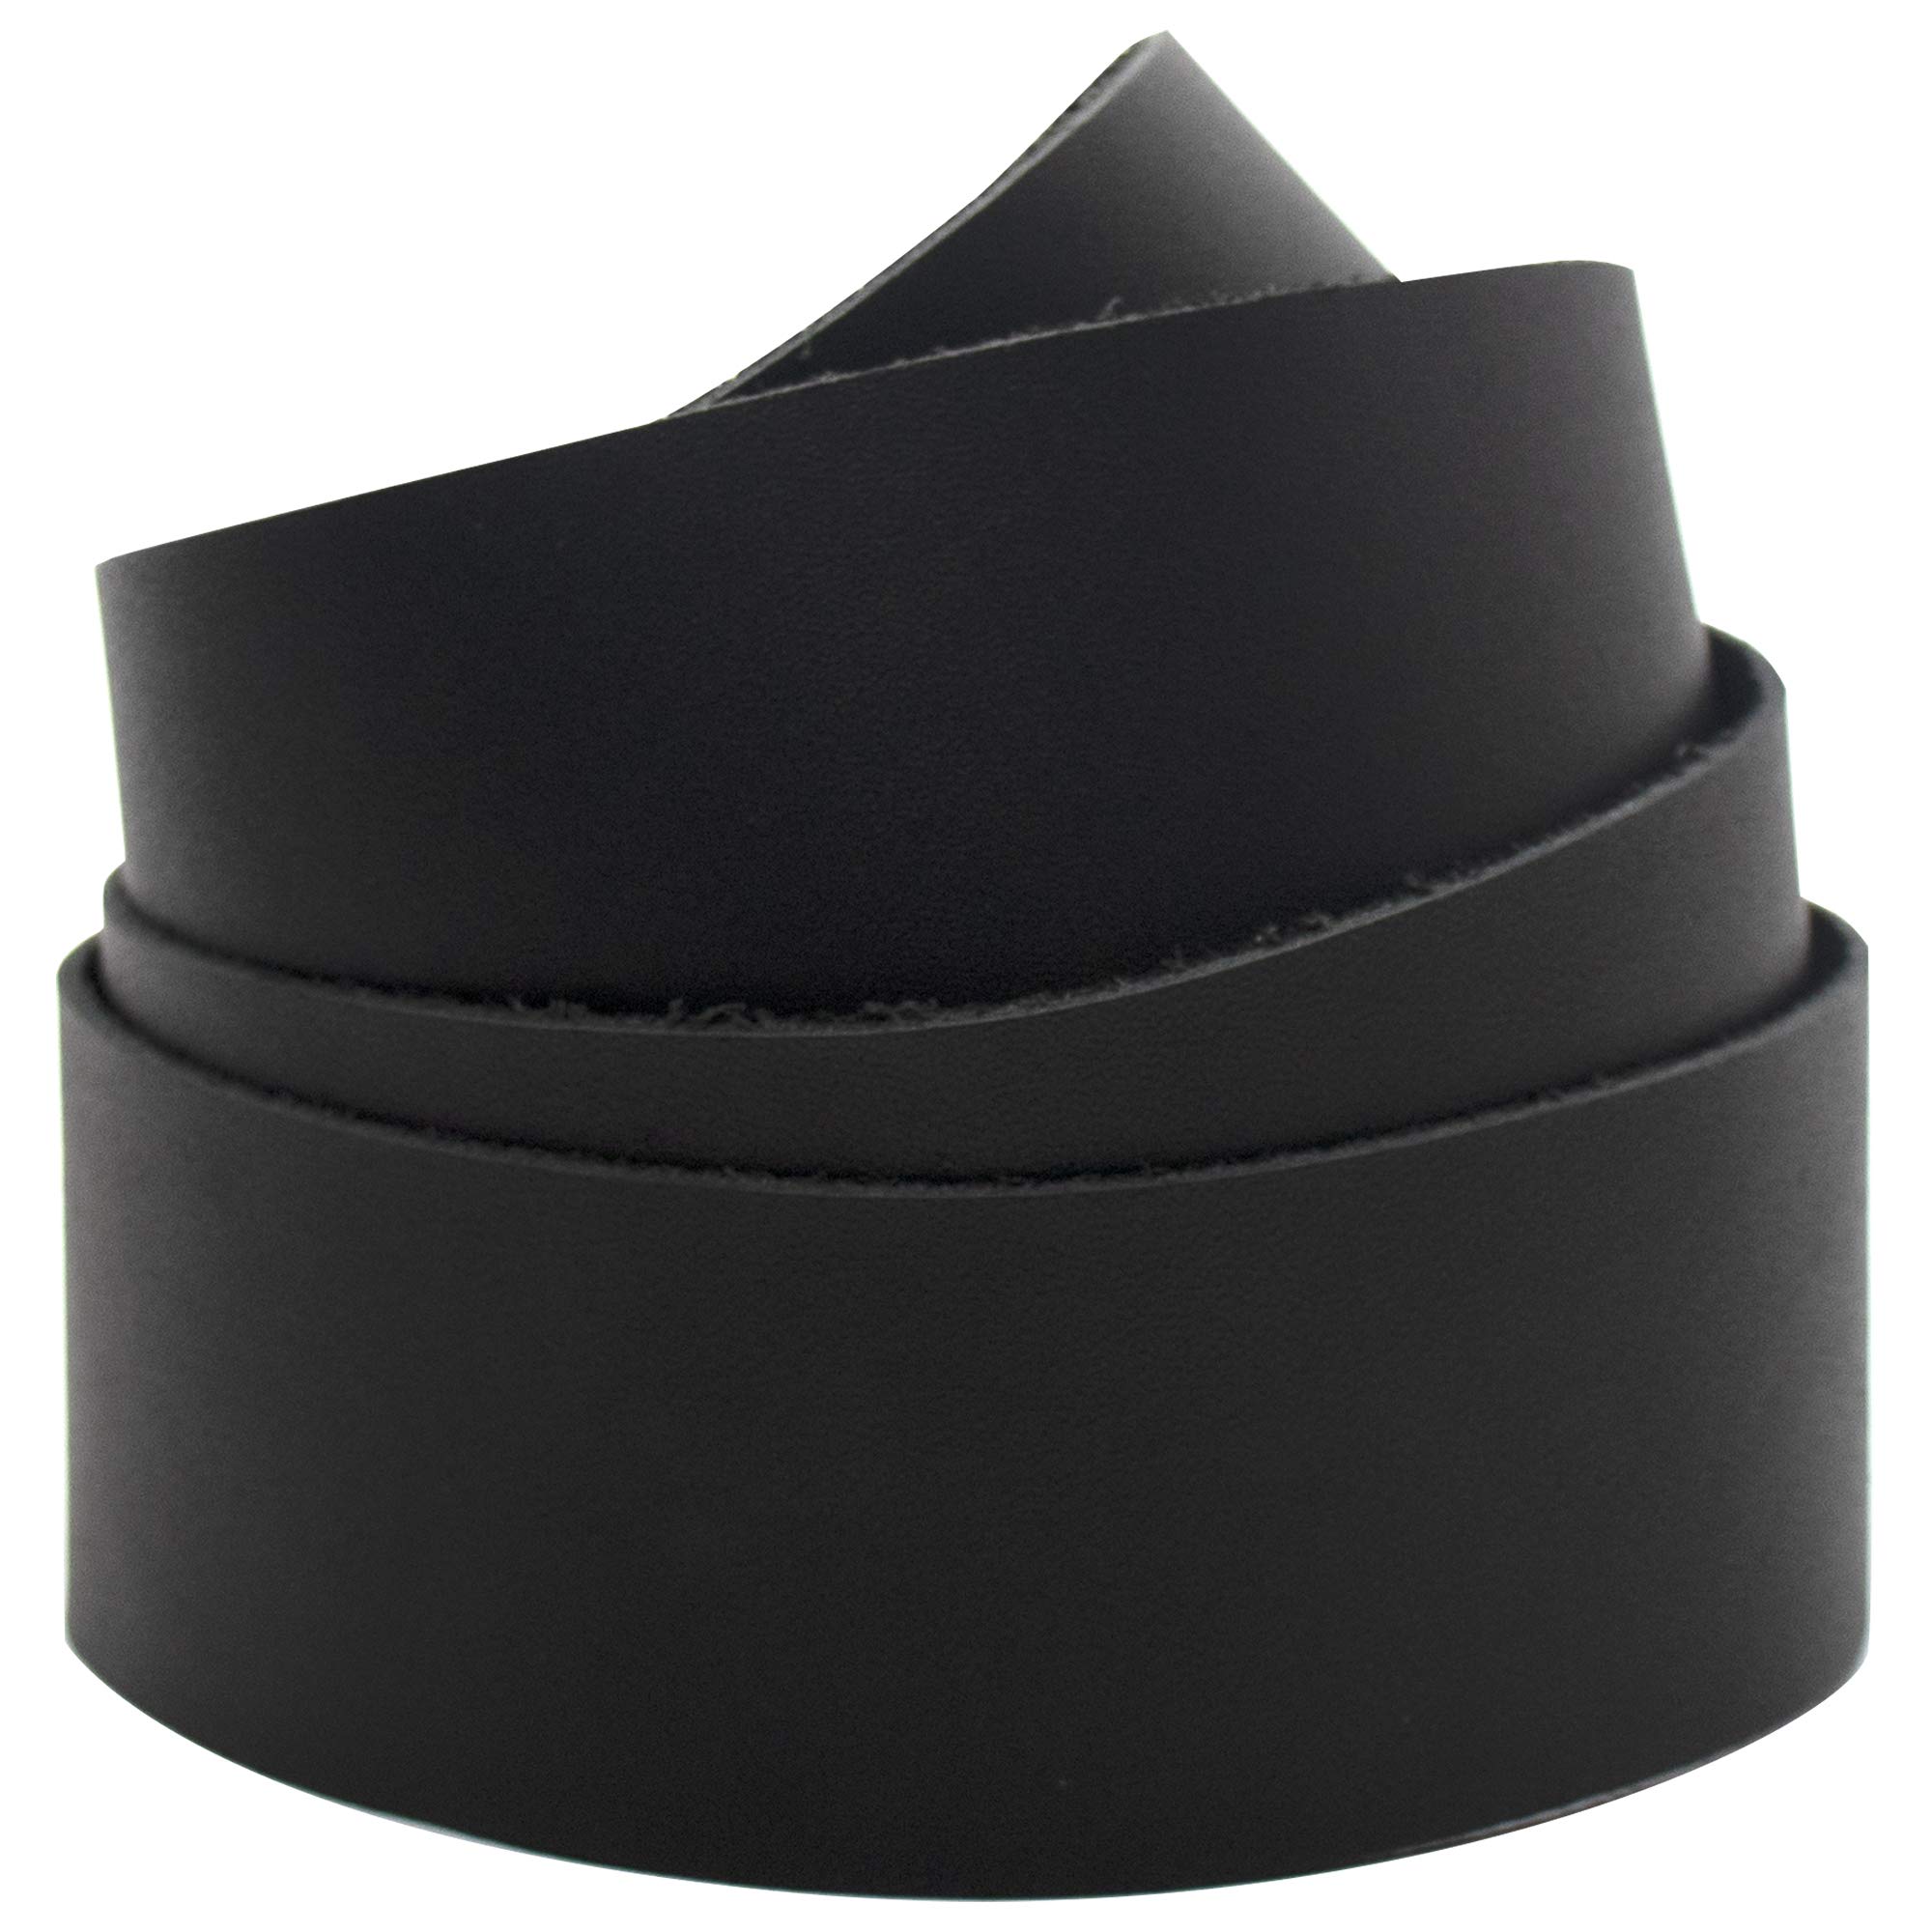 Realeather Leather Strip, 1.5 inch x 42 inch, Black